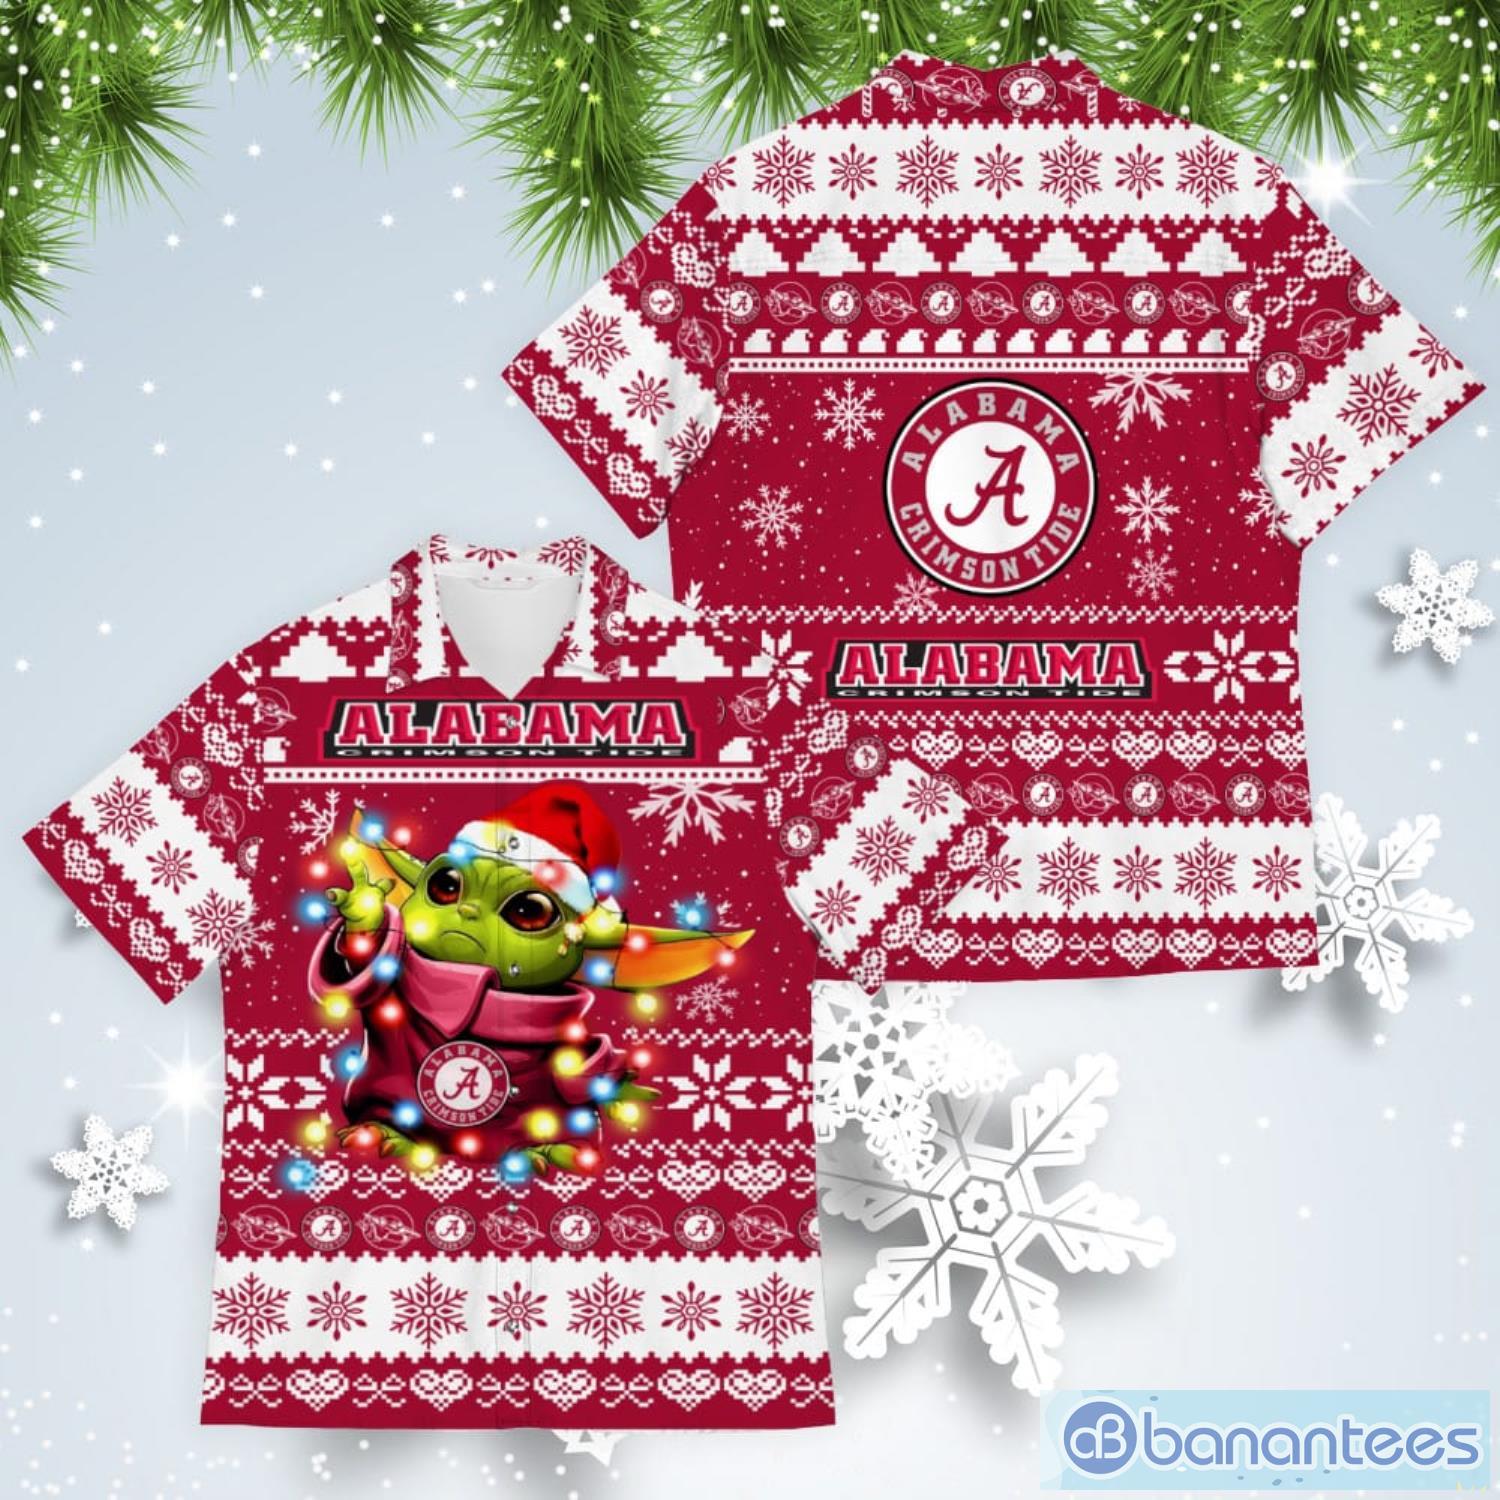 Alabama Crimson Tide Baby Yoda Star Wars American Ugly Christmas Sweater Pattern Hawaiian Shirt Product Photo 1